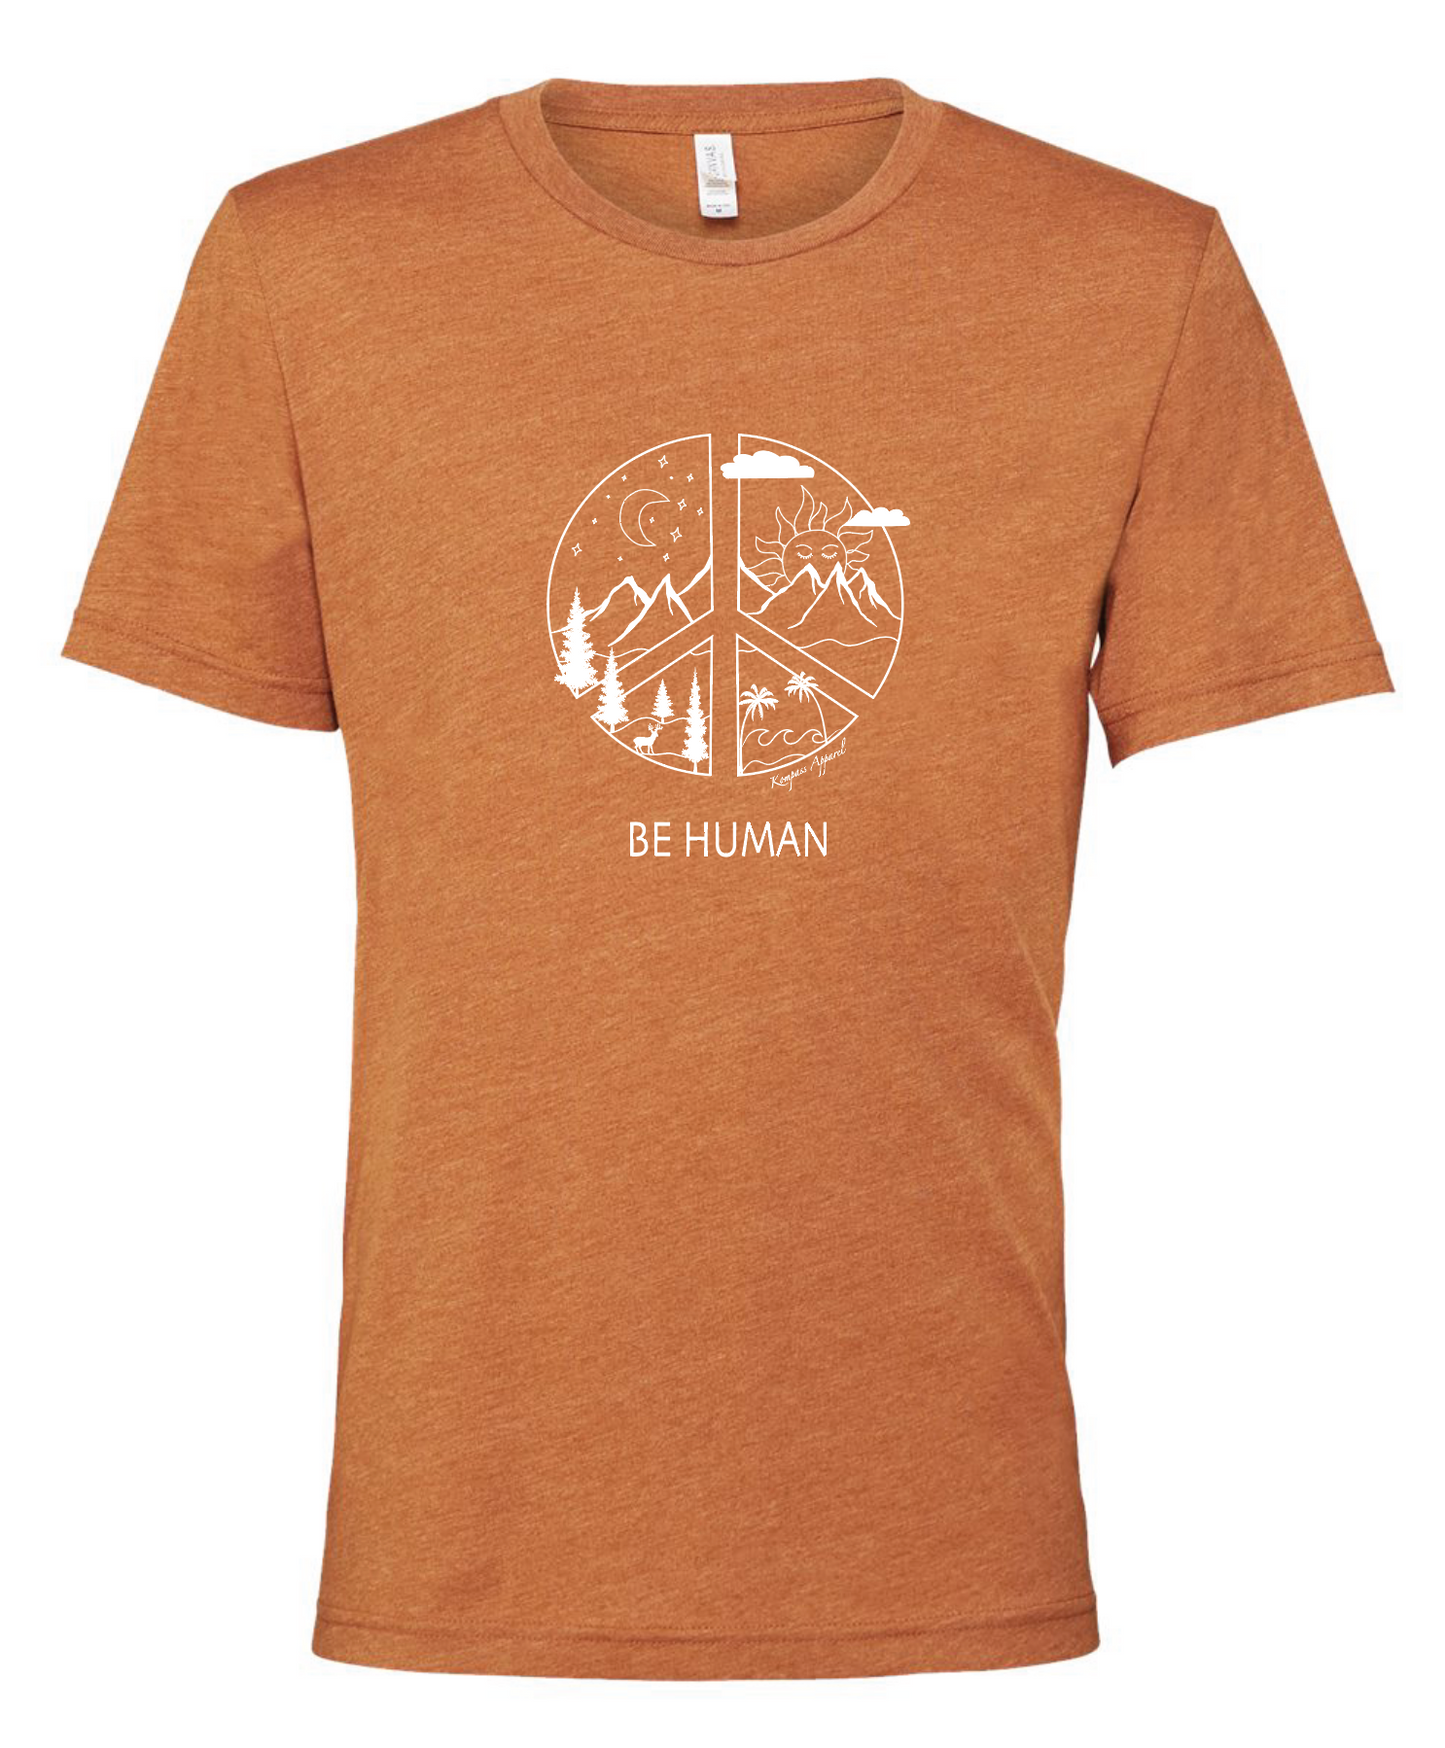 Be Human Tee - Burnt Orange